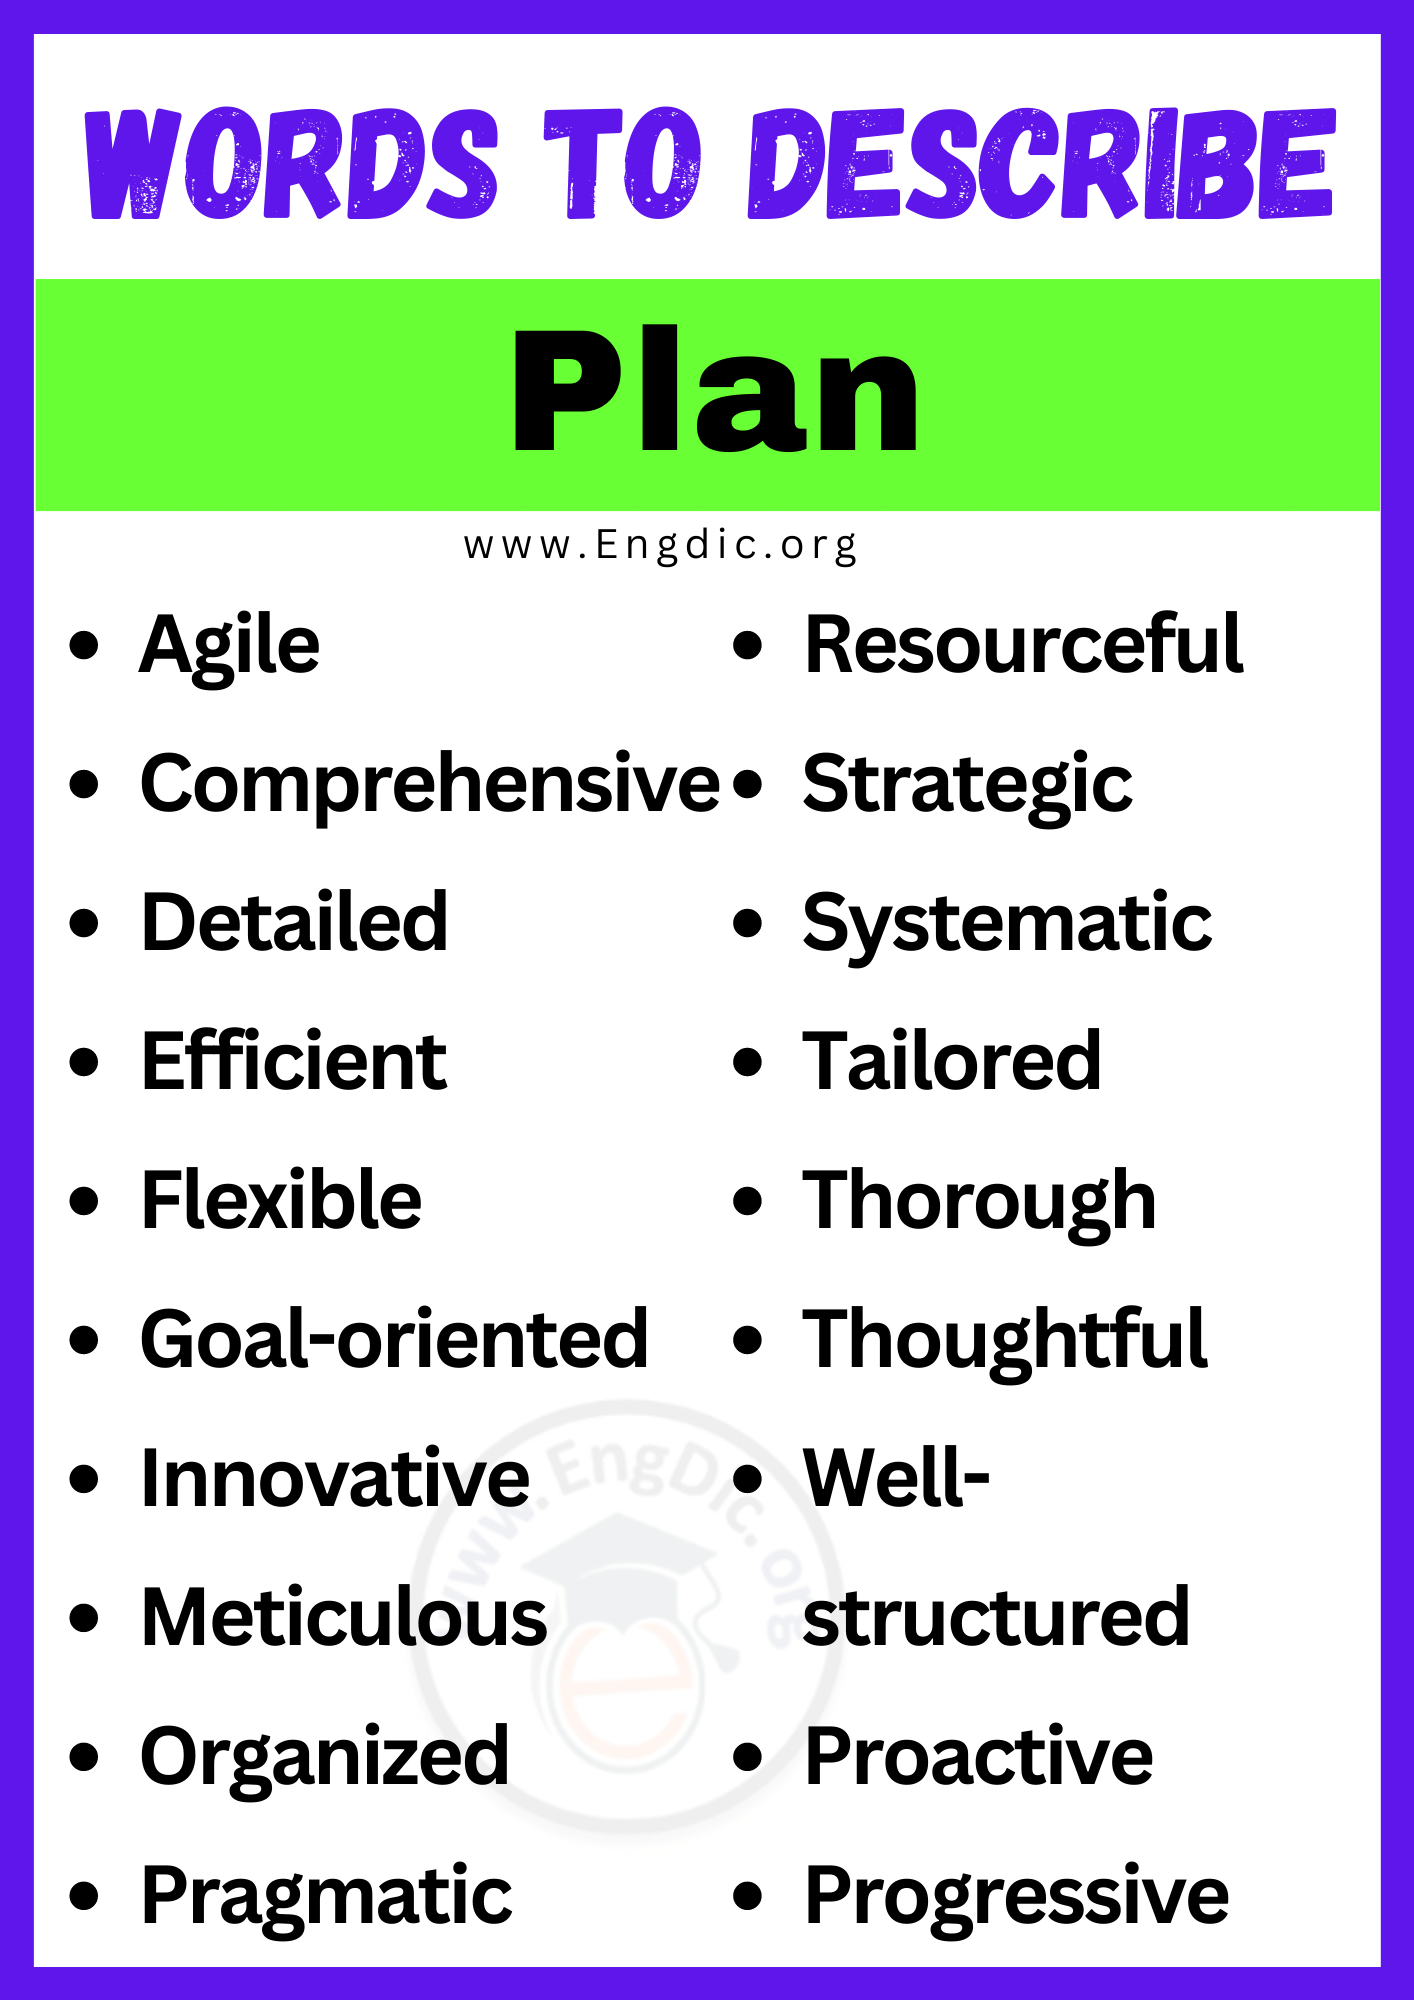 Words to Describe Plan